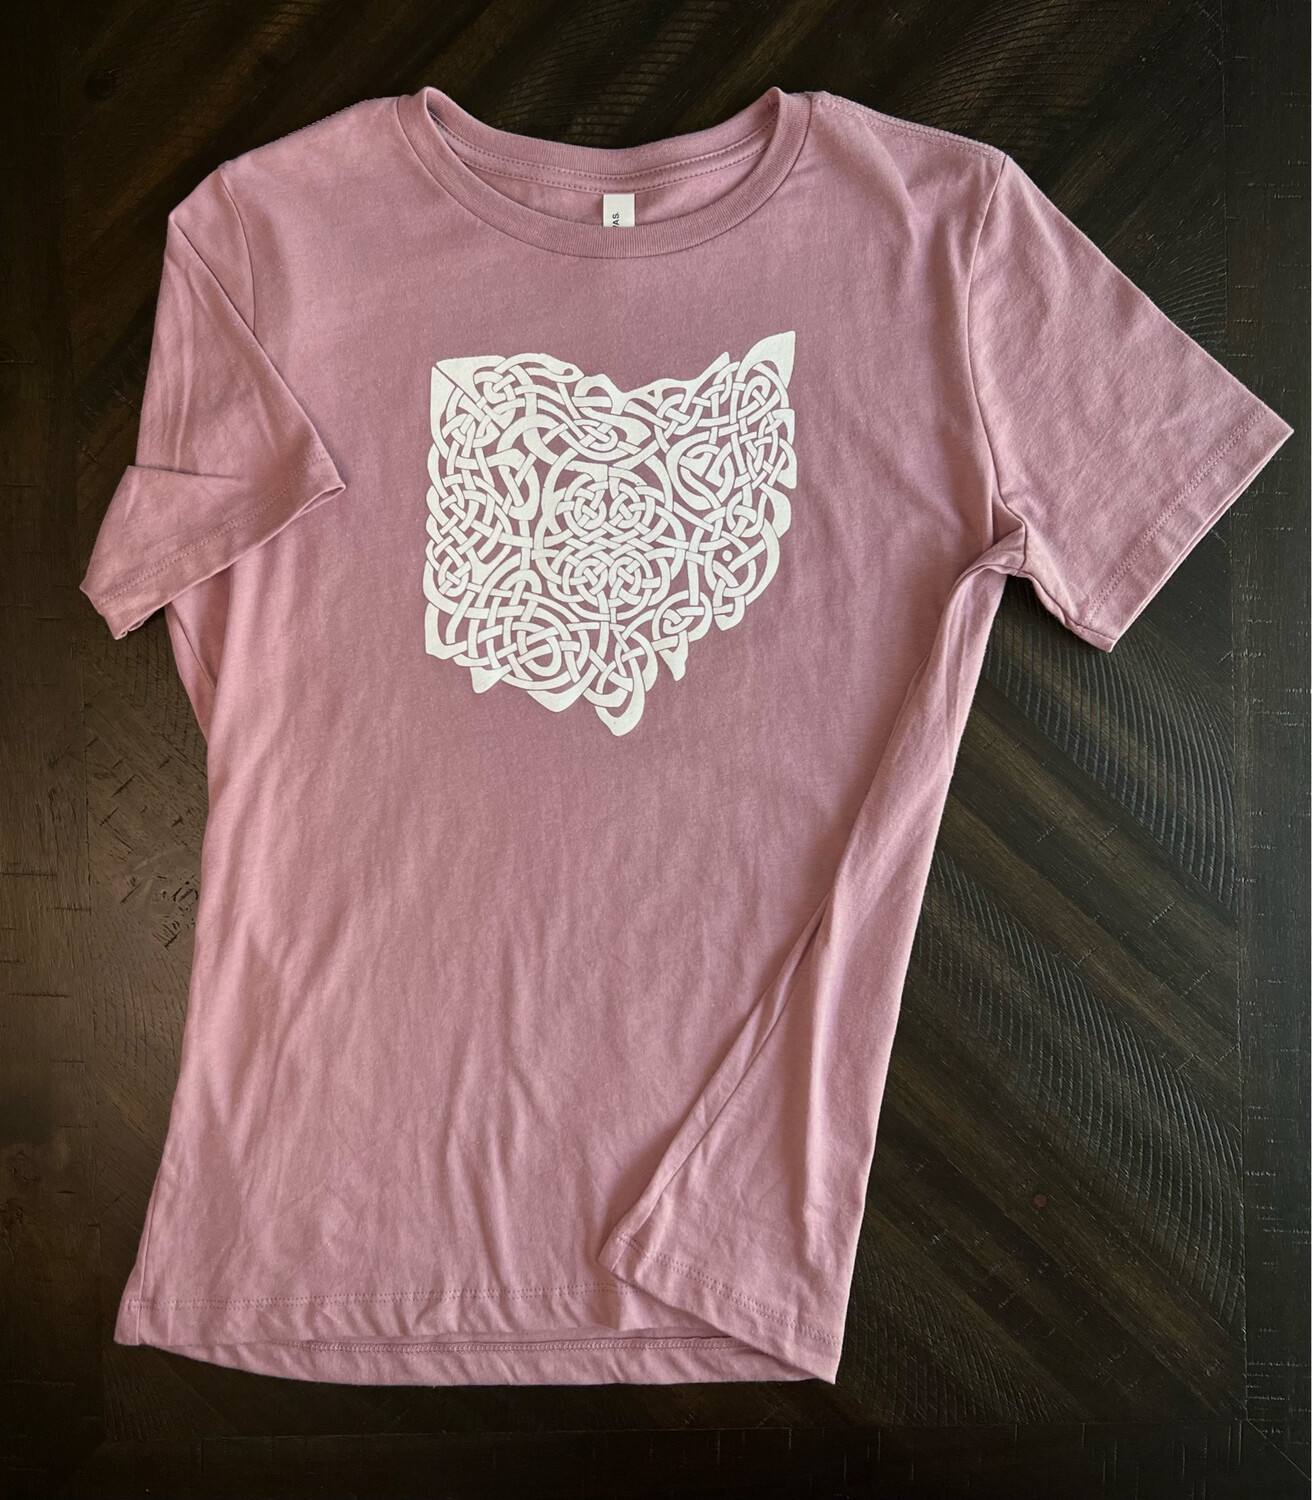 SALE! Ohio Celt T-Shirt (Medium)